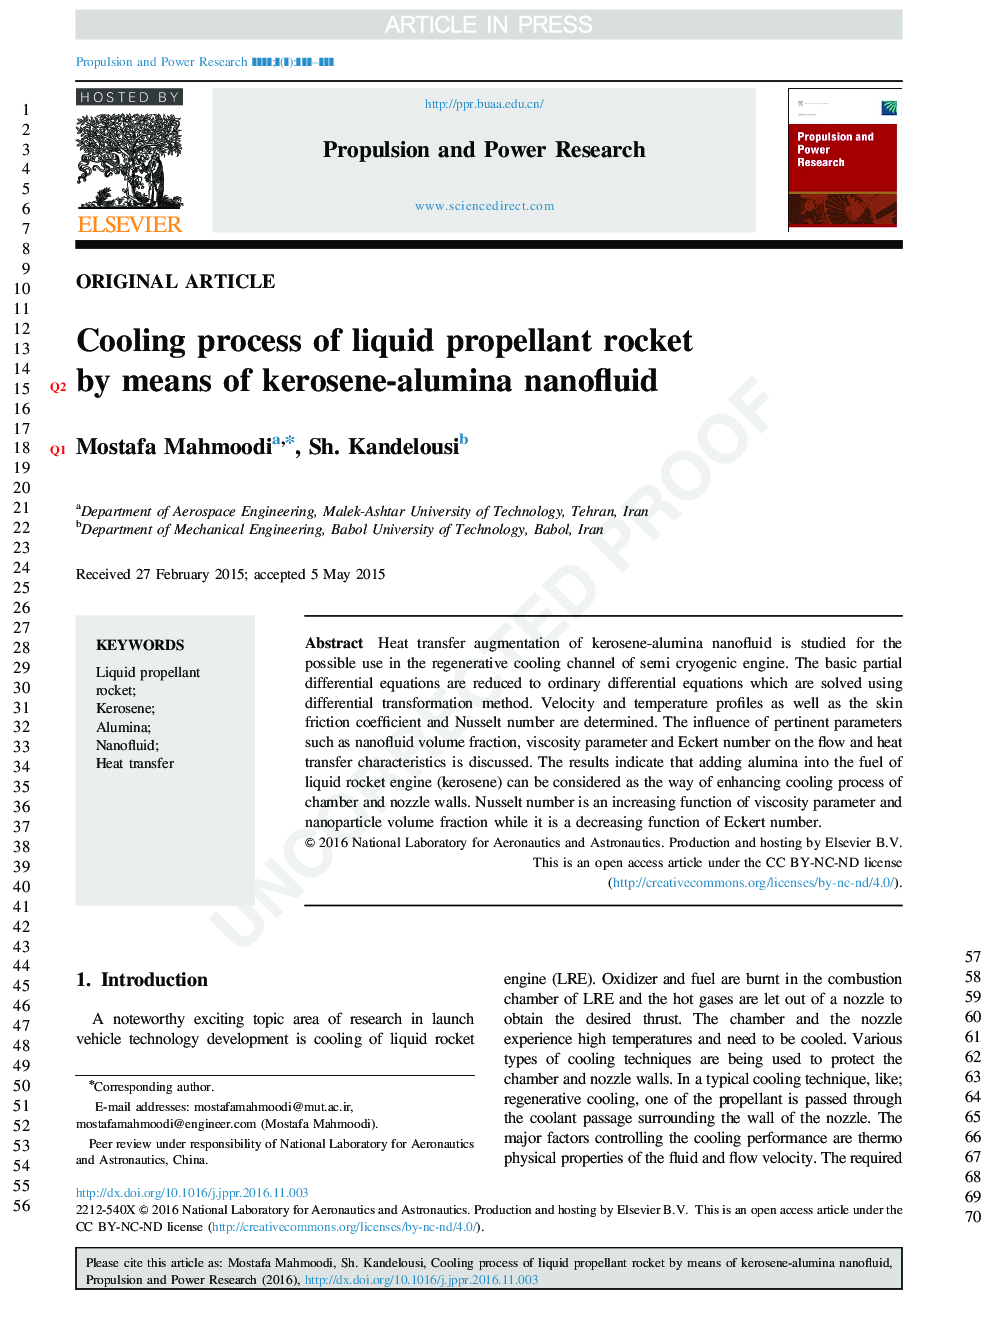 Cooling process of liquid propellant rocket by means of kerosene-alumina nanofluid